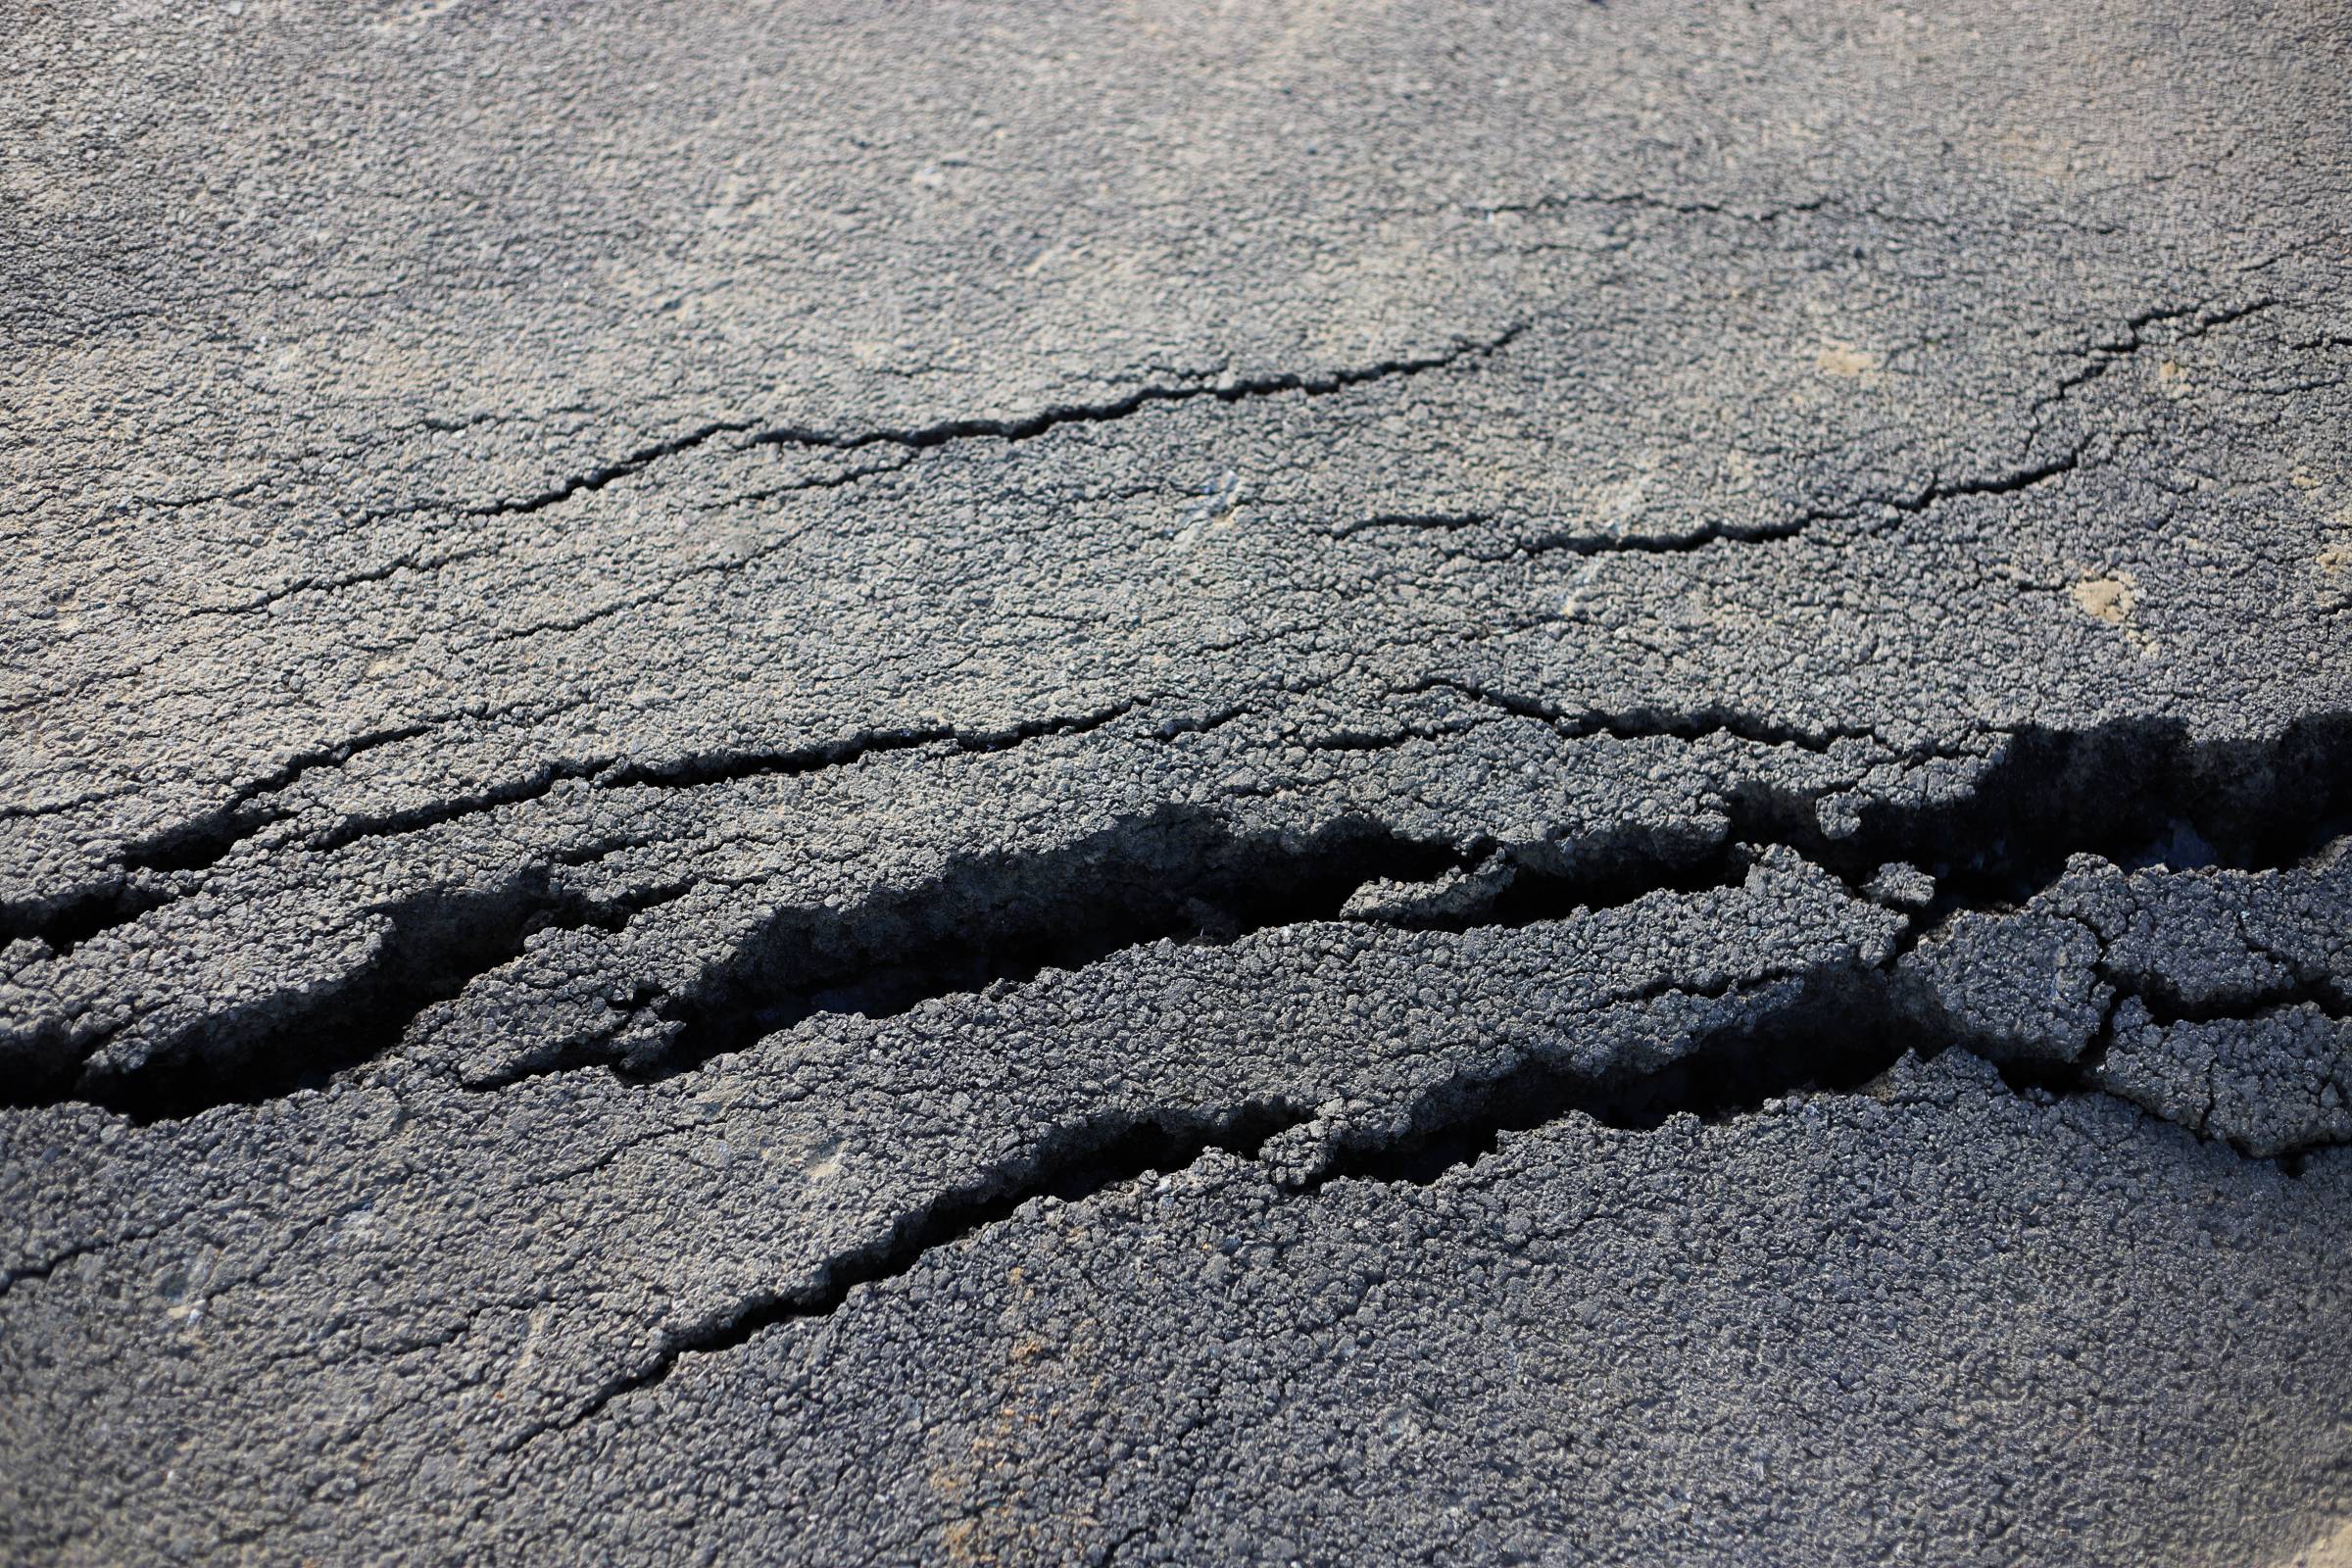 a tarmac driveway with cracks